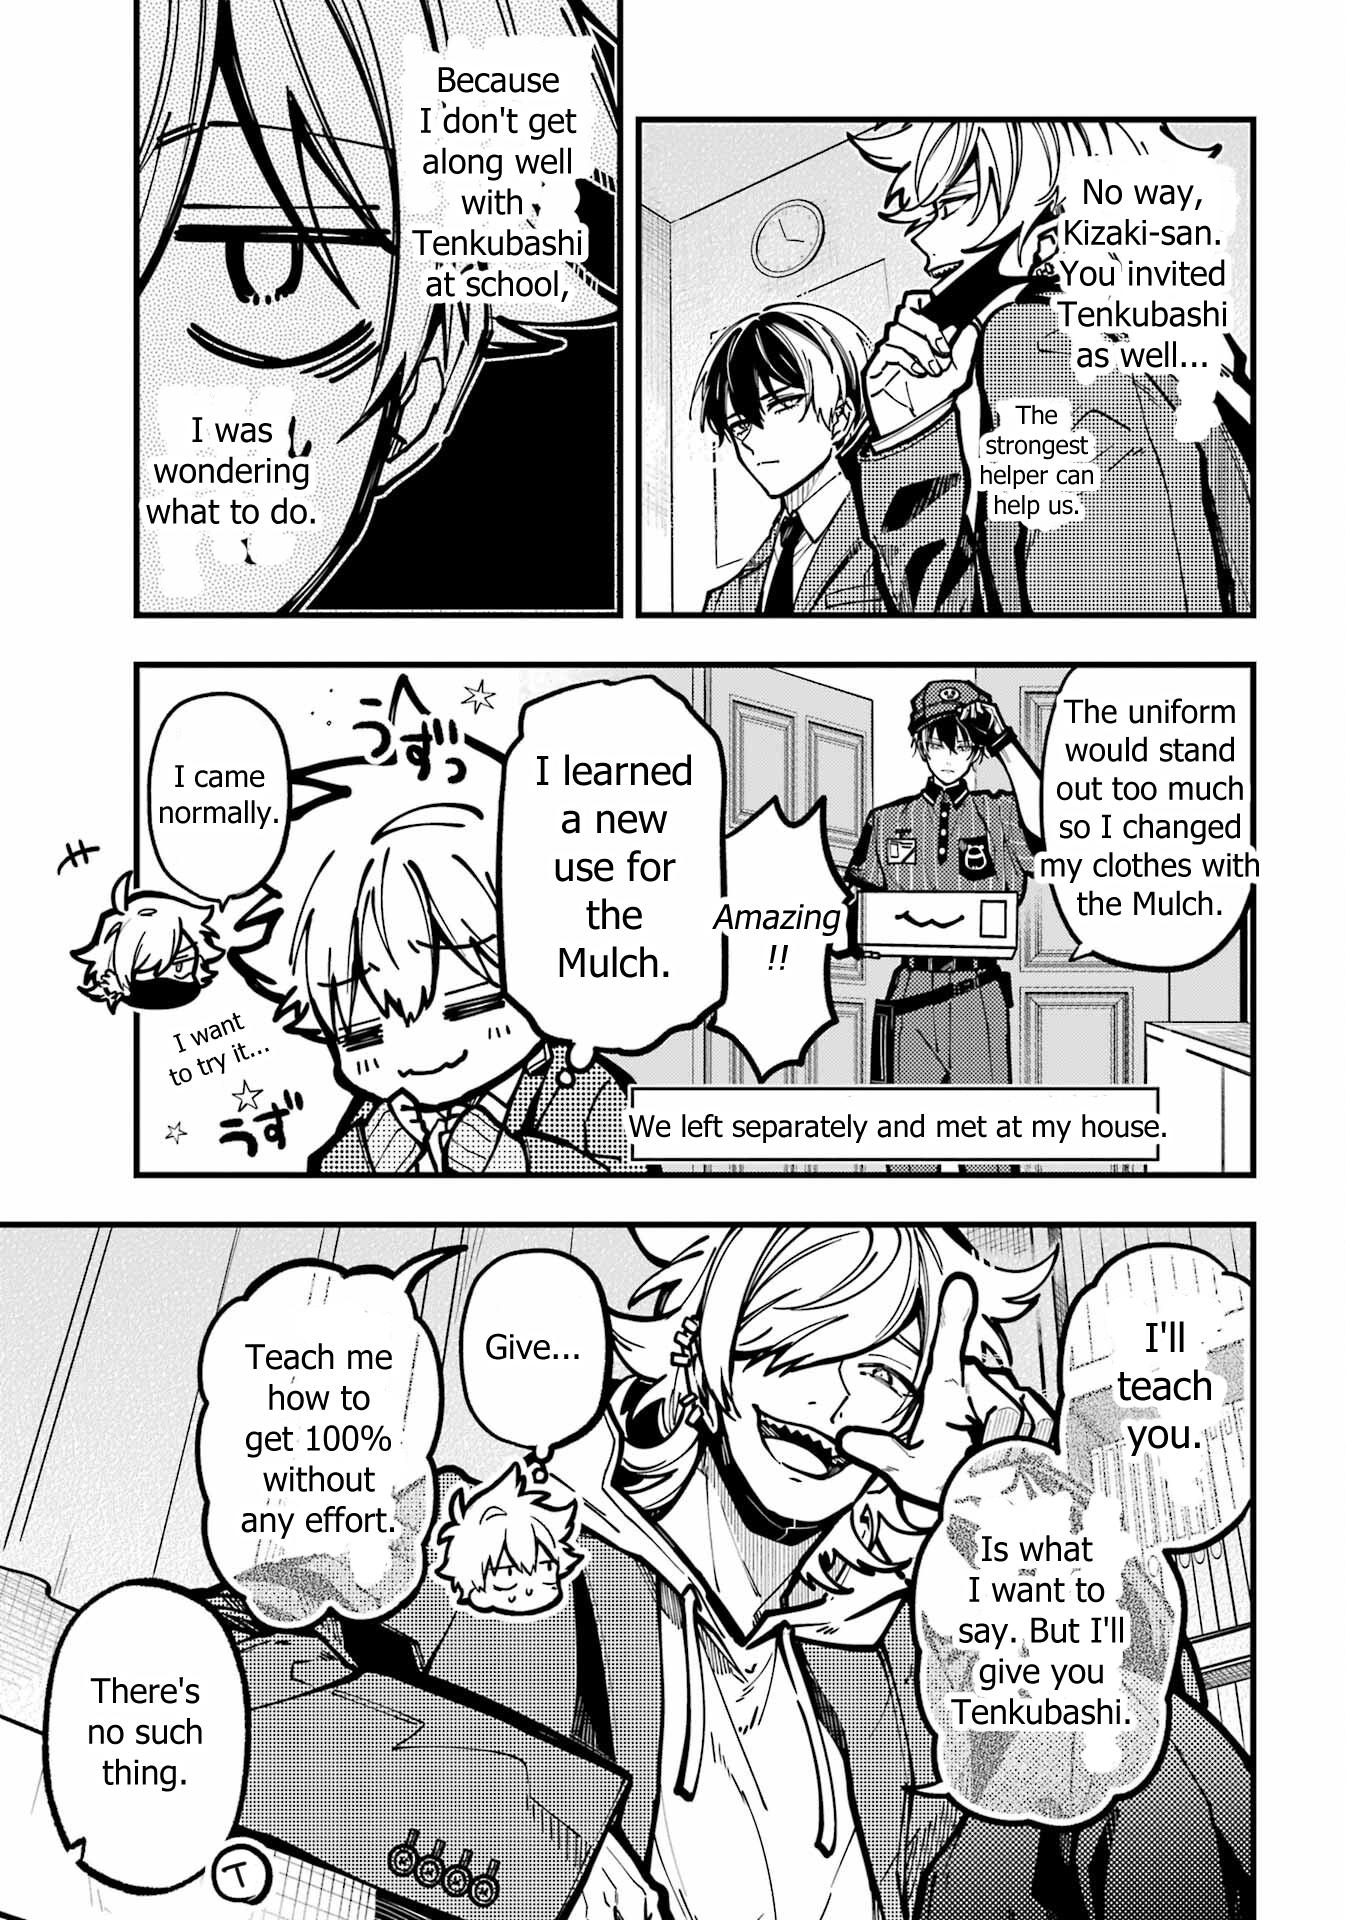 Tokyo Ravens Vol.7 Ch.31 Page 4 - Mangago